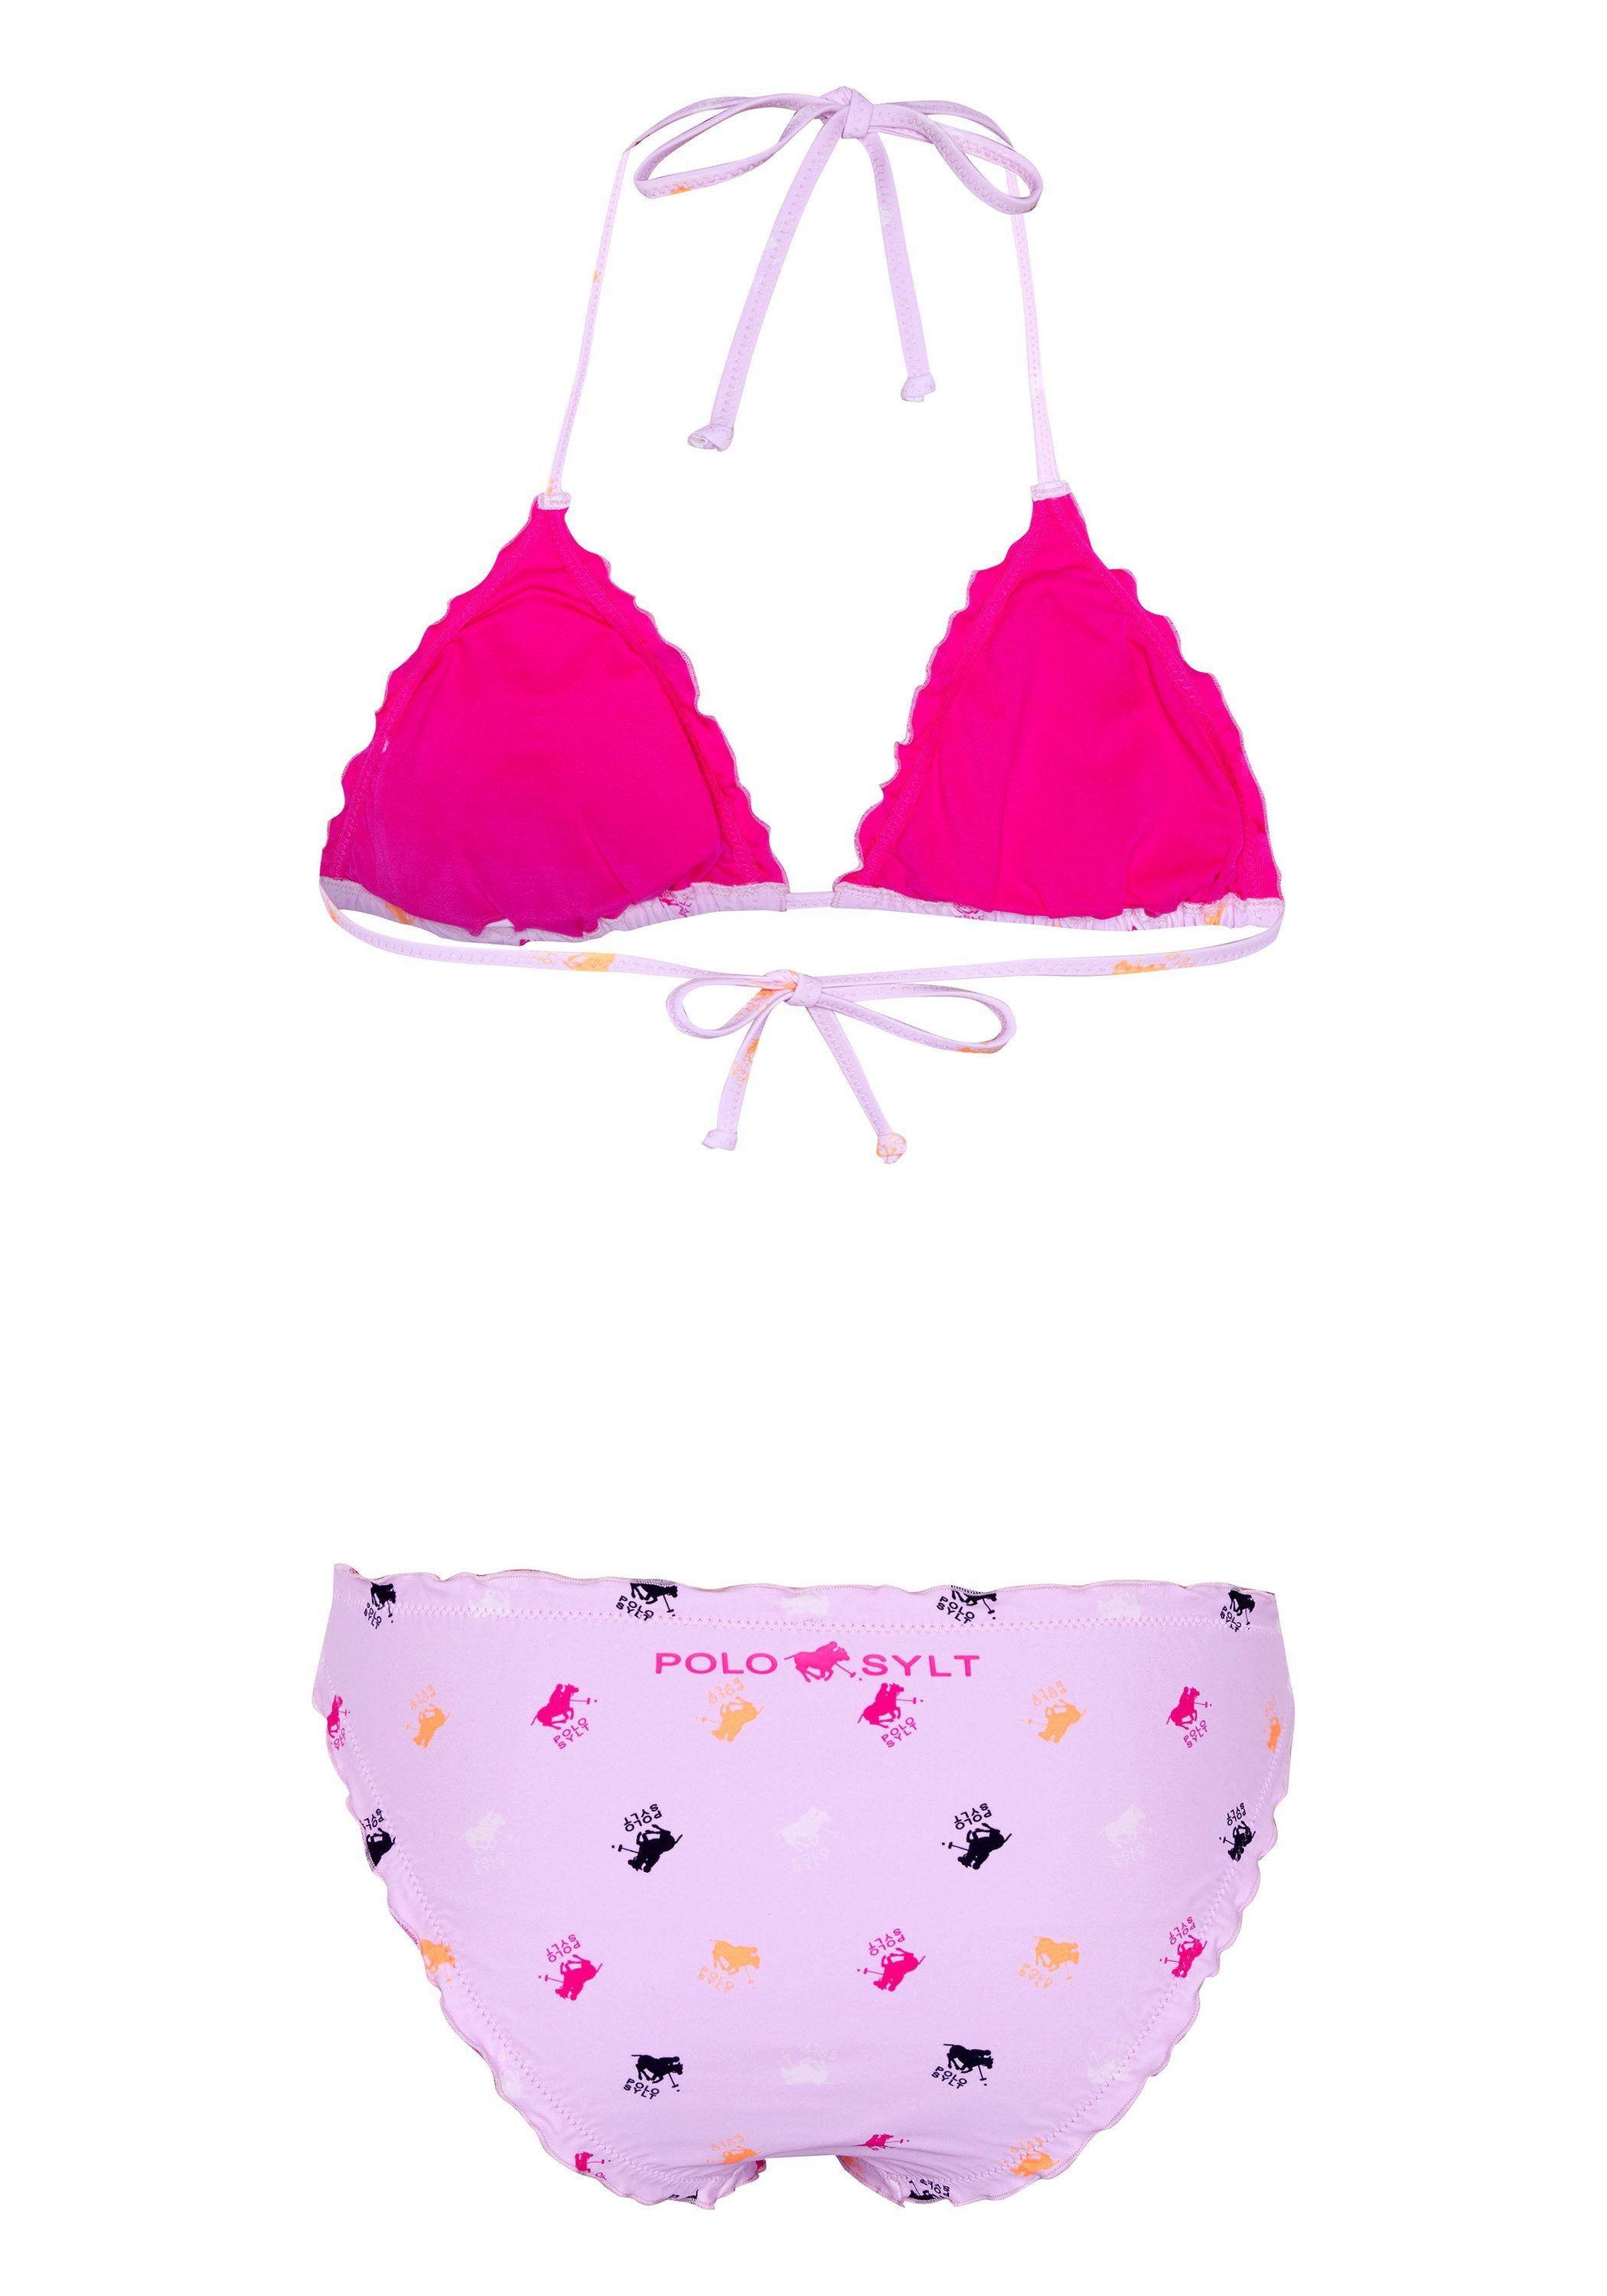 Allovermuster (Set) mit Pink/Pink Light Sylt 2829 Polo Triangel-Bikini